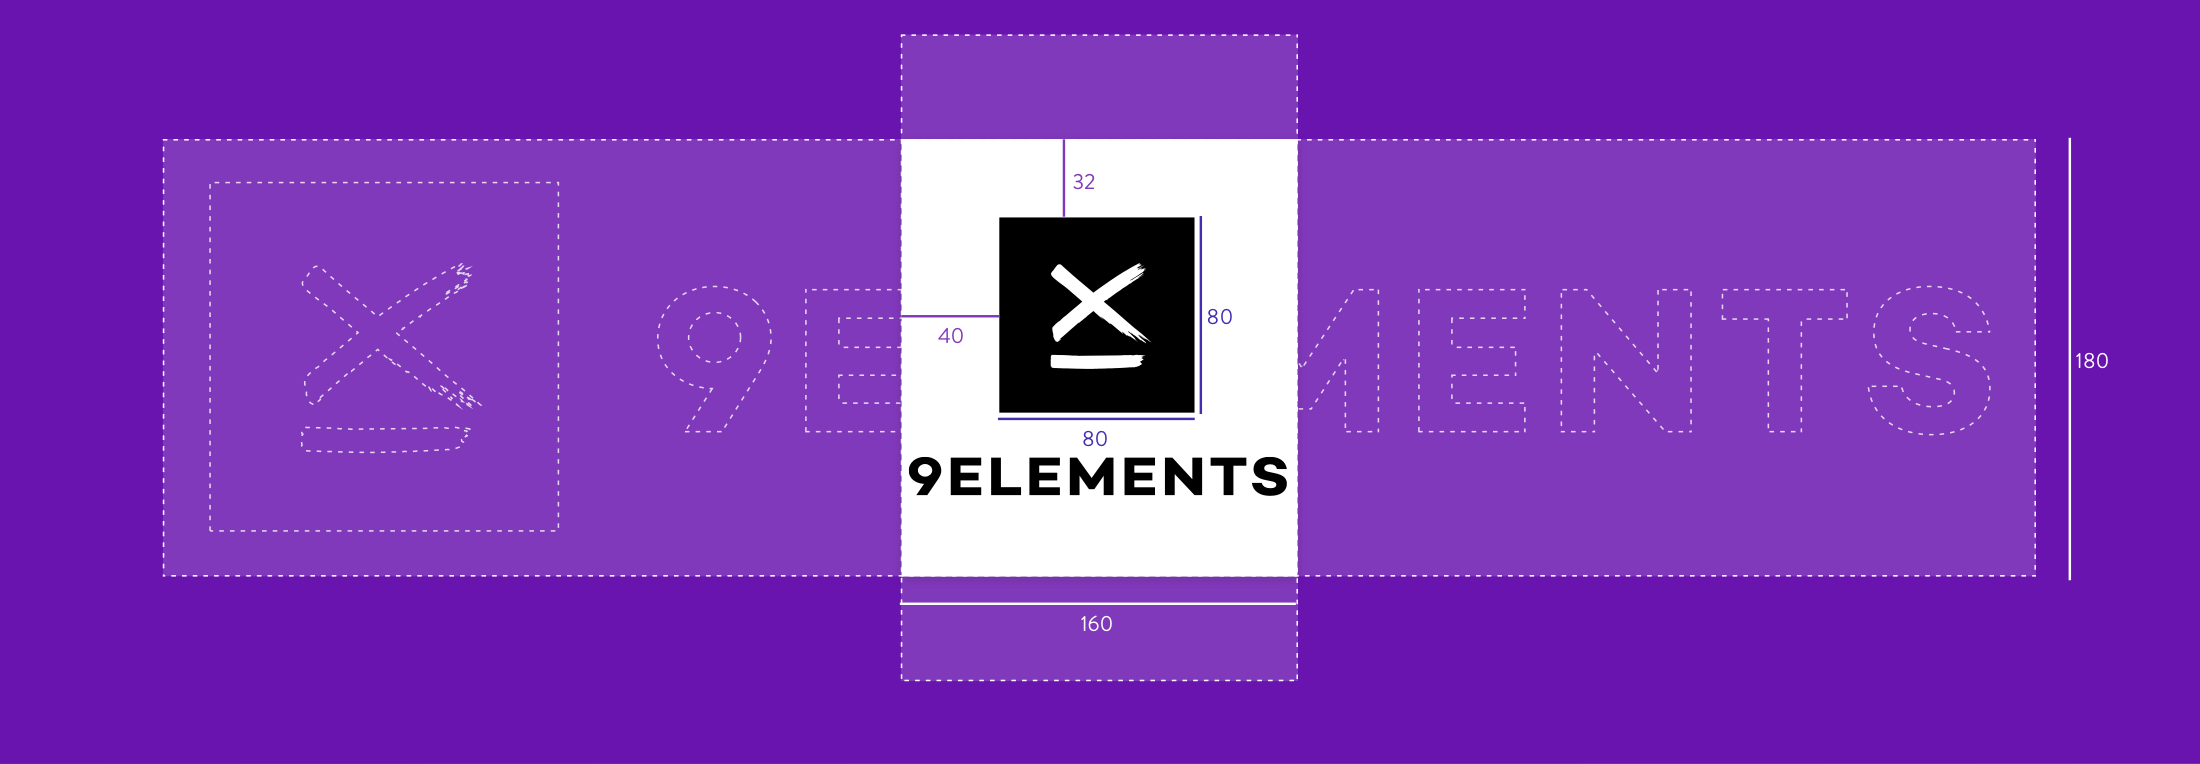 Popular Purple Logo - Building a responsive image – 9elements – Medium